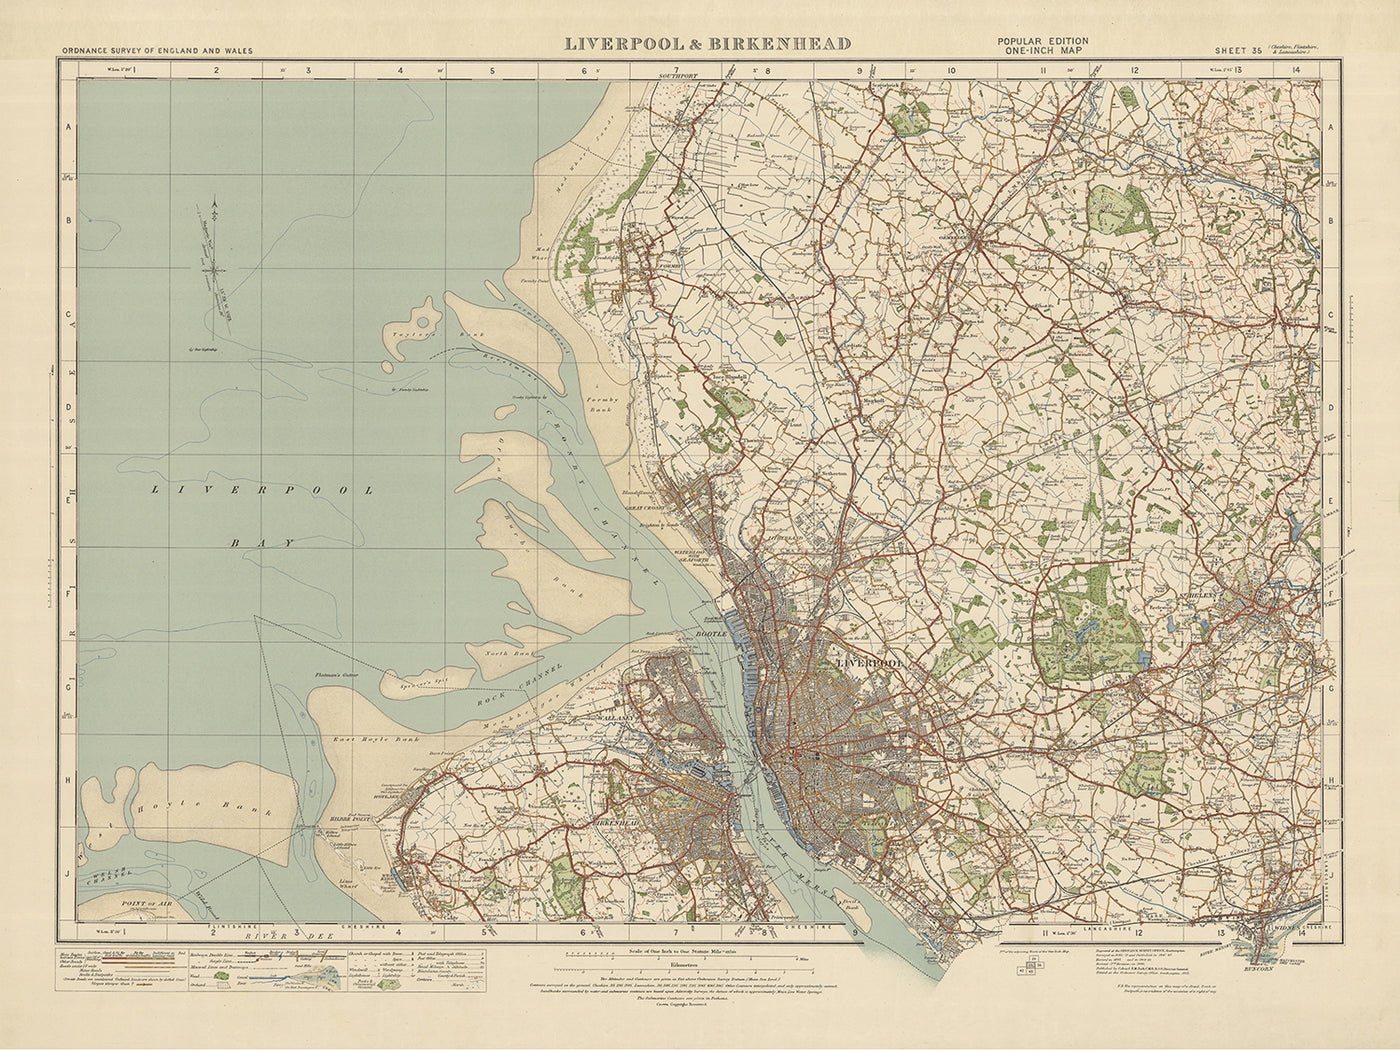 Old Ordnance Survey Map, Sheet 35 - Liverpool & Birkenhead, 1925: St Helens, West Kirby, Ormskirk, Bootle, Wallasey